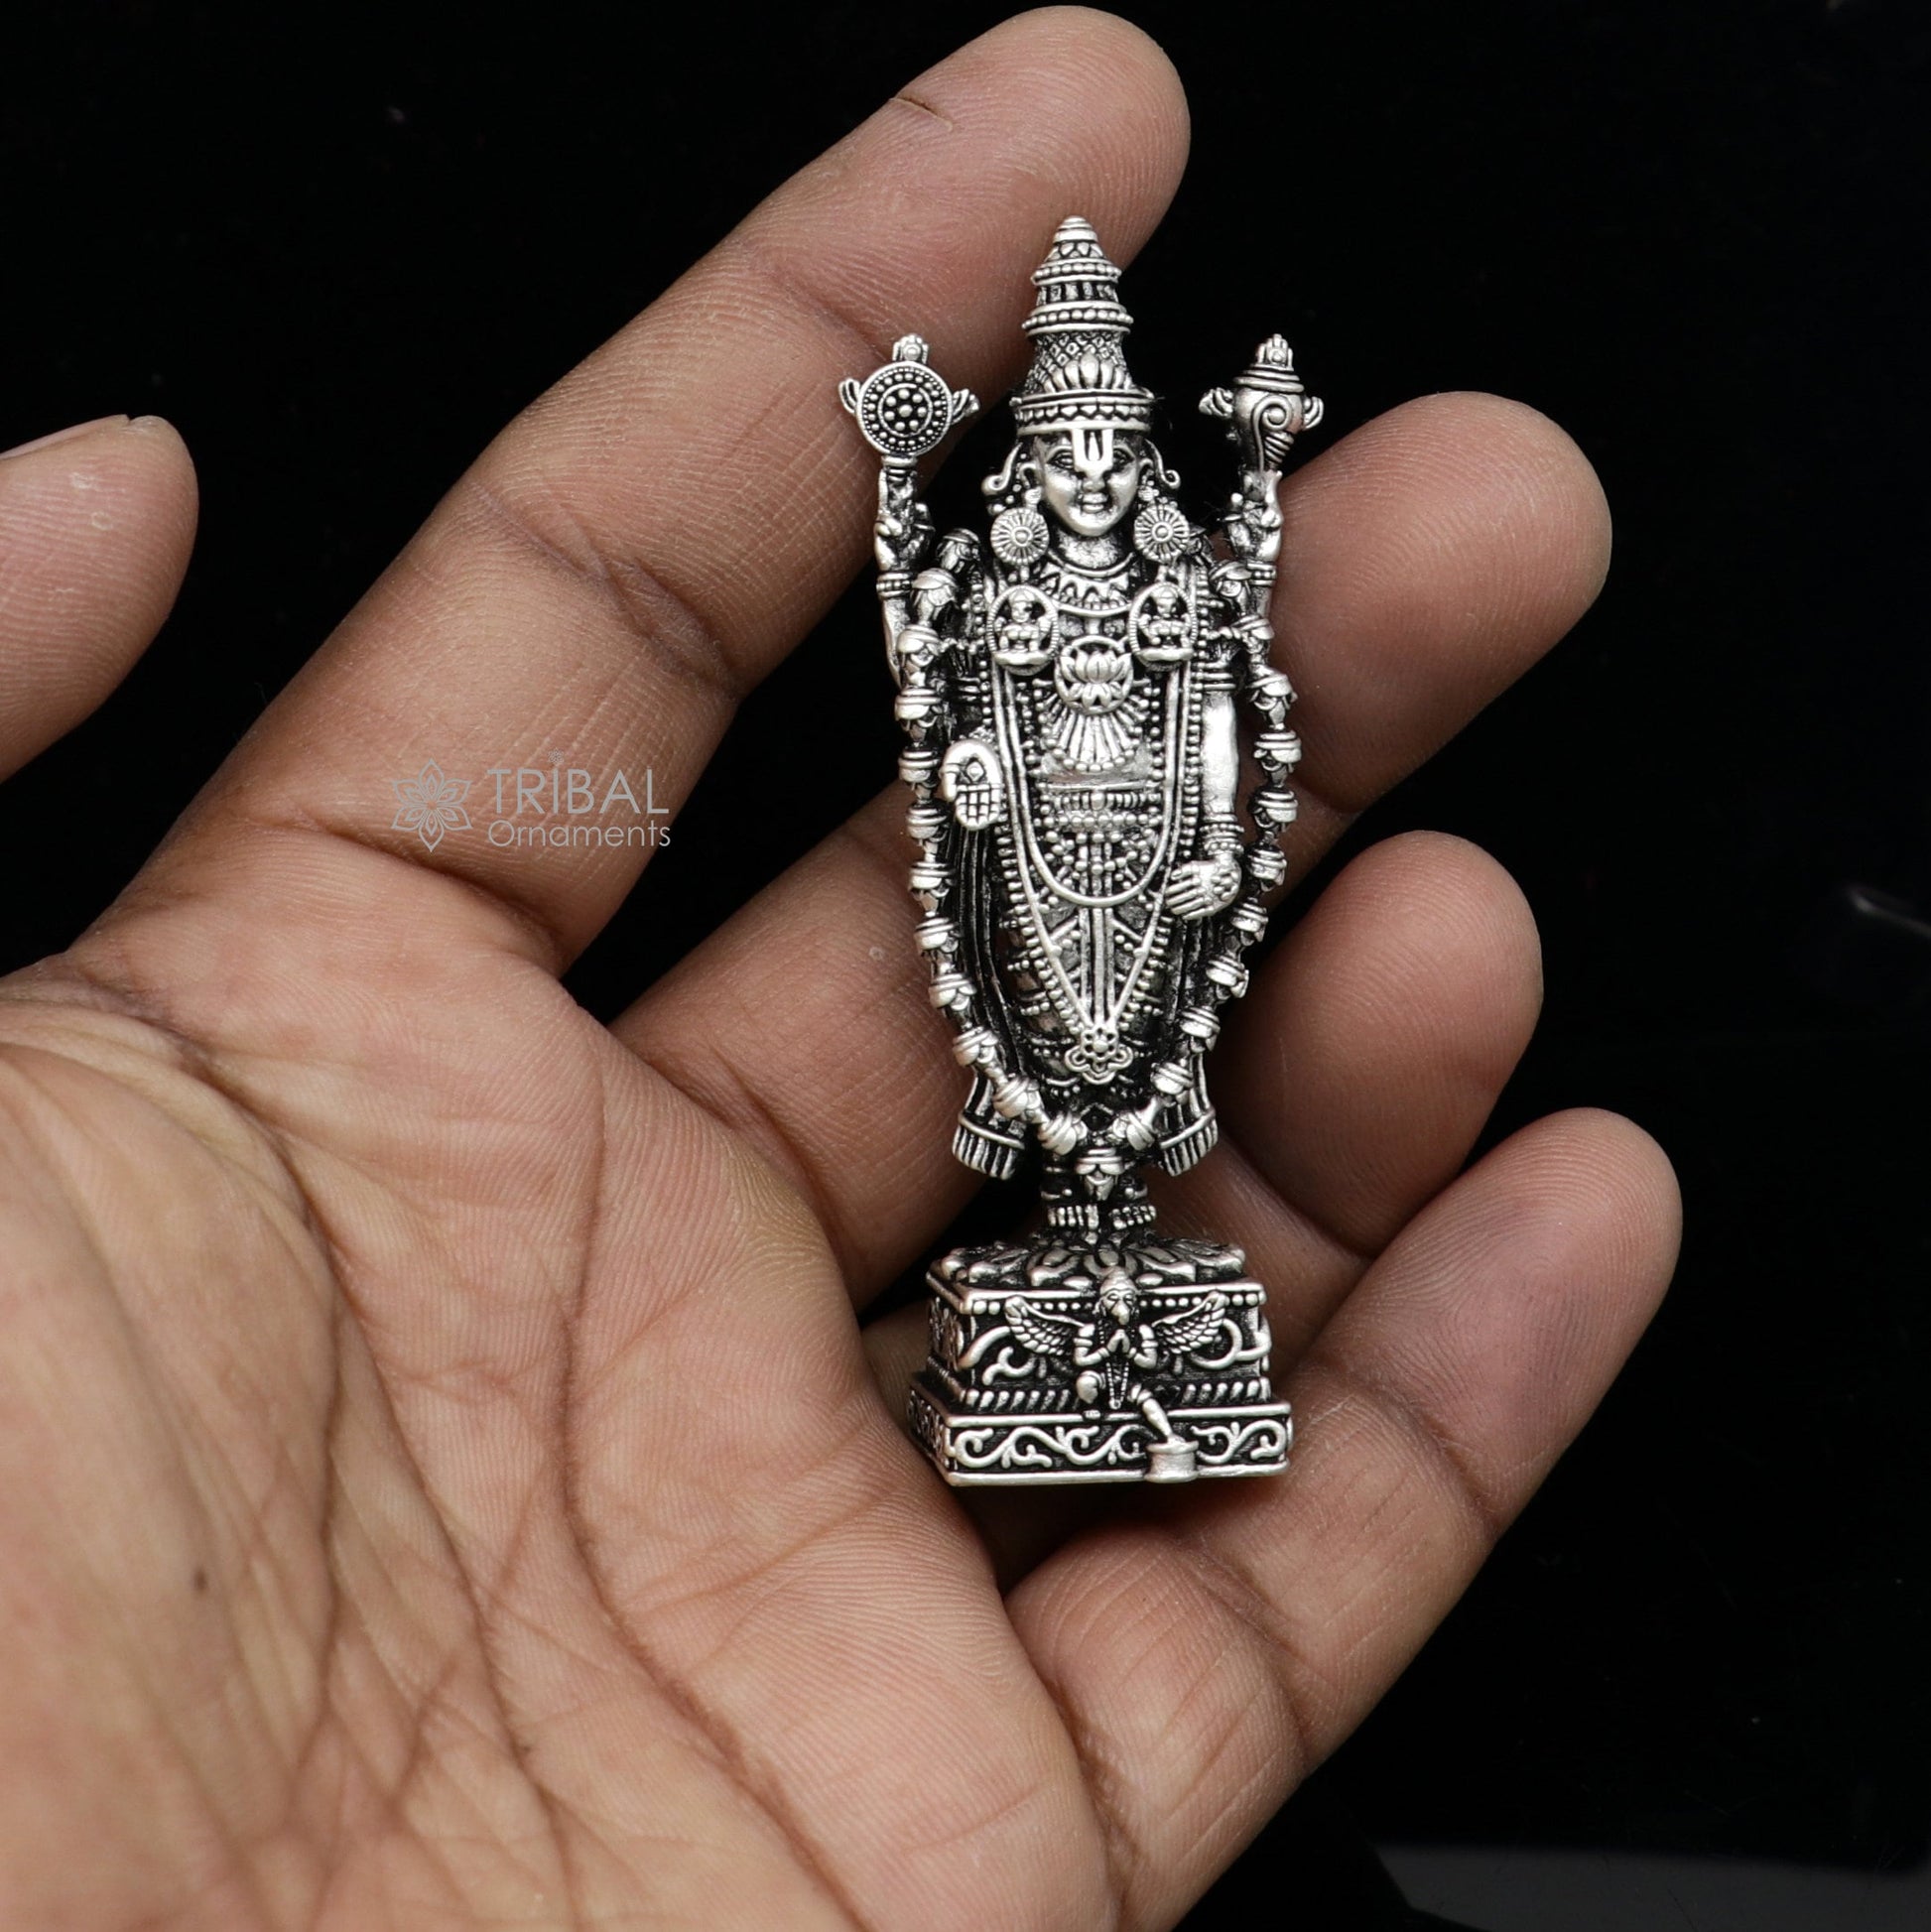 3" 925 sterling silver stylish divine venkateswara swamy idol tirupati balaji statue sculpture figurine amazing crafted statue gift art657 - TRIBAL ORNAMENTS